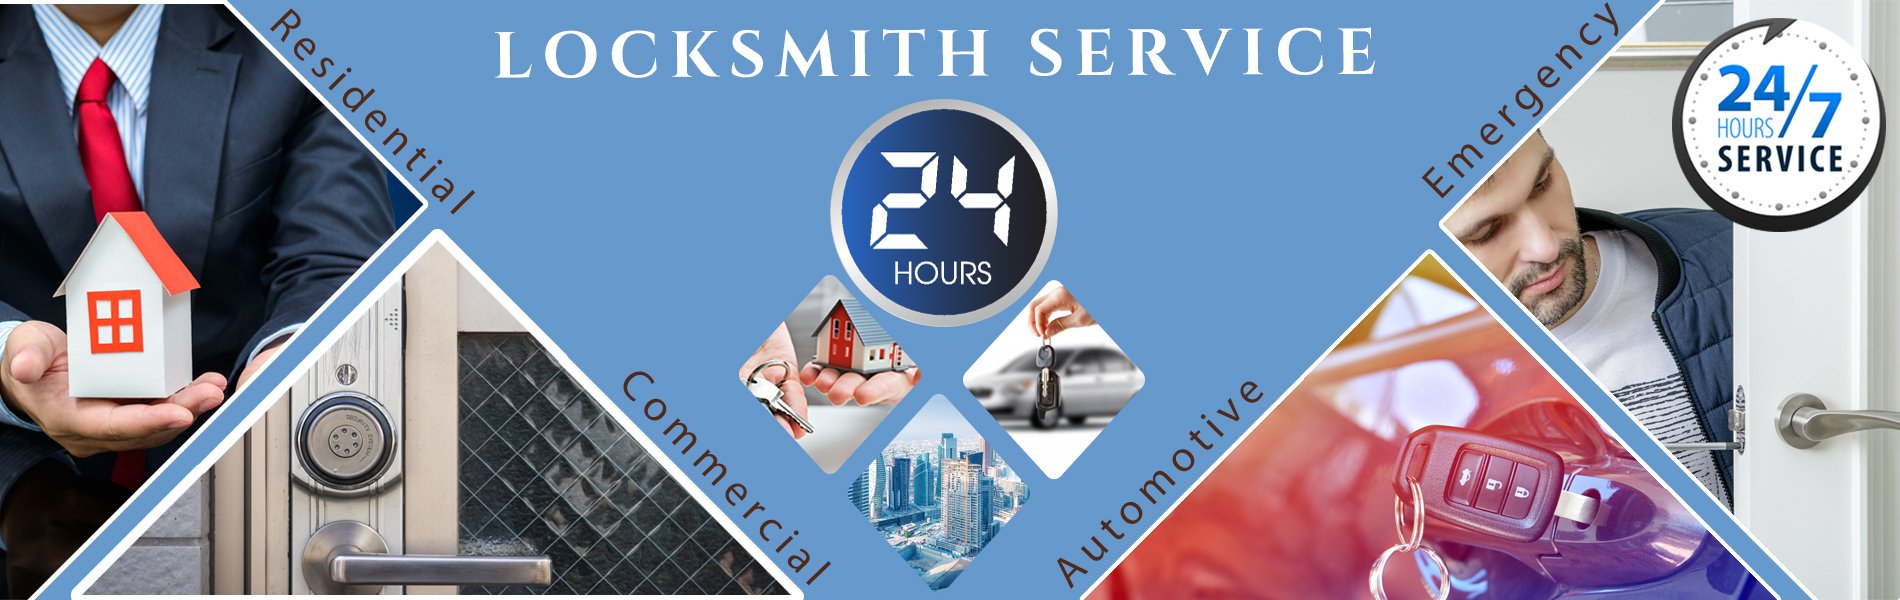 State Locksmith Services Memphis, TN 901-641-5752